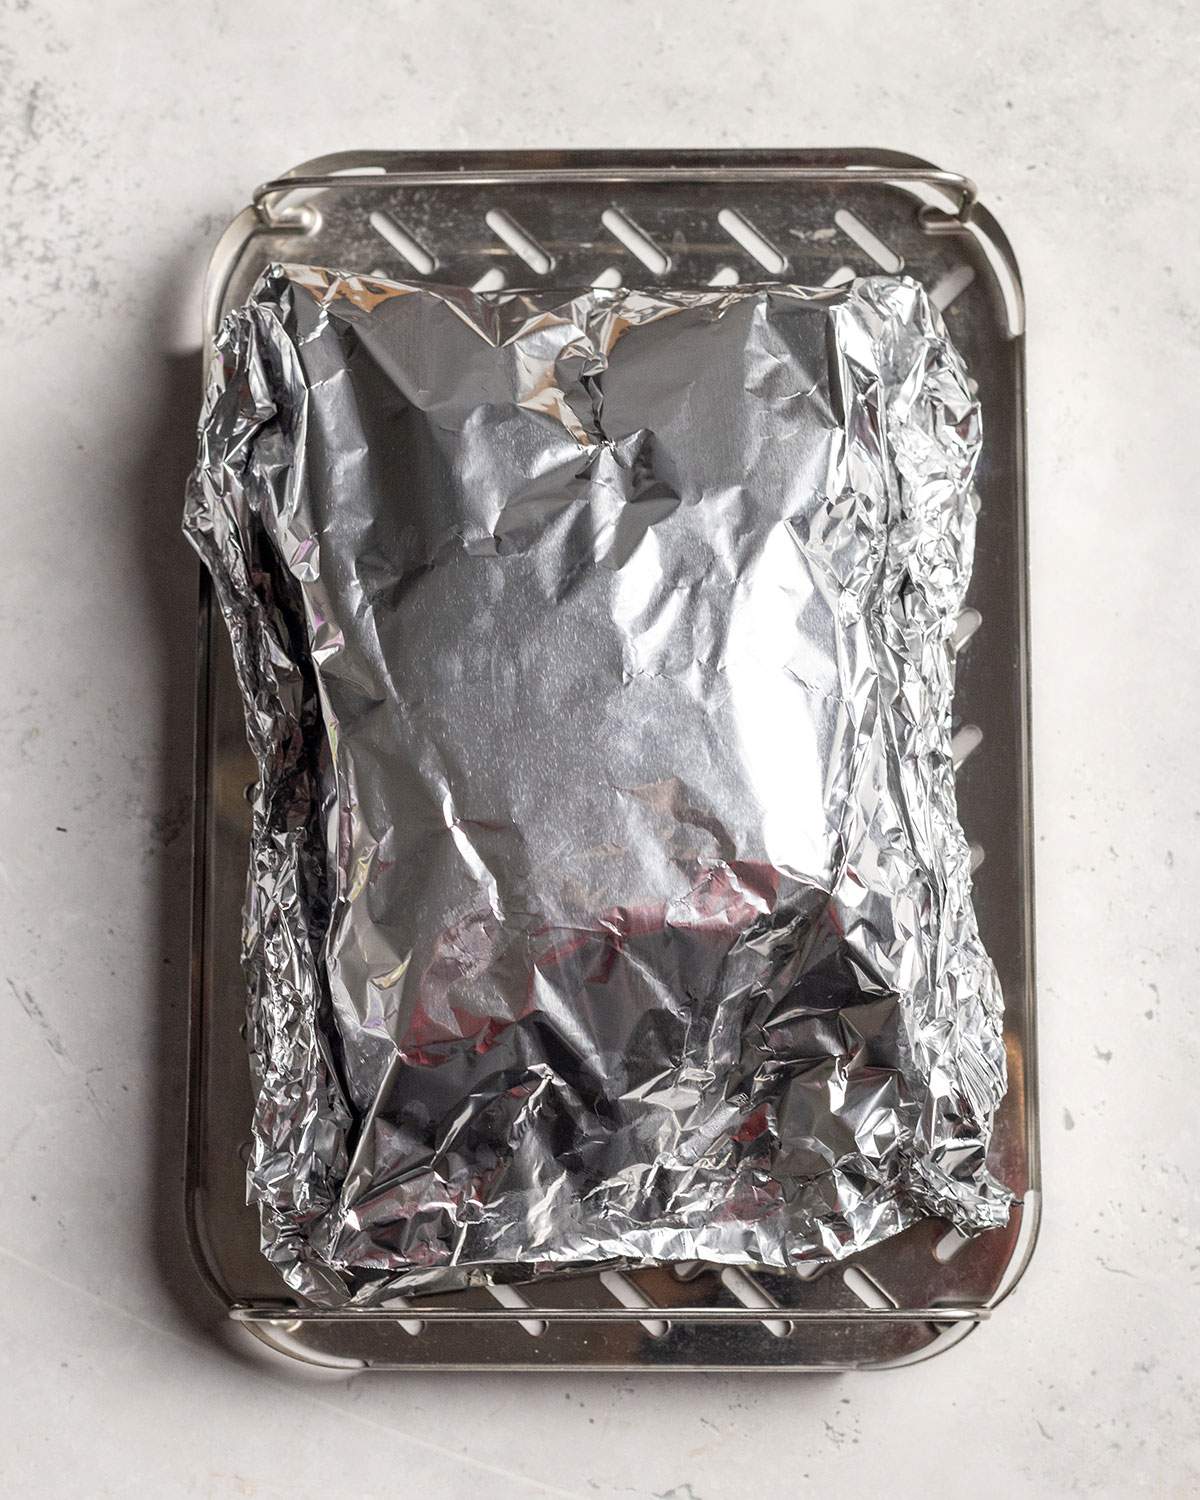 vegan turkey wrapped in kitchen foil